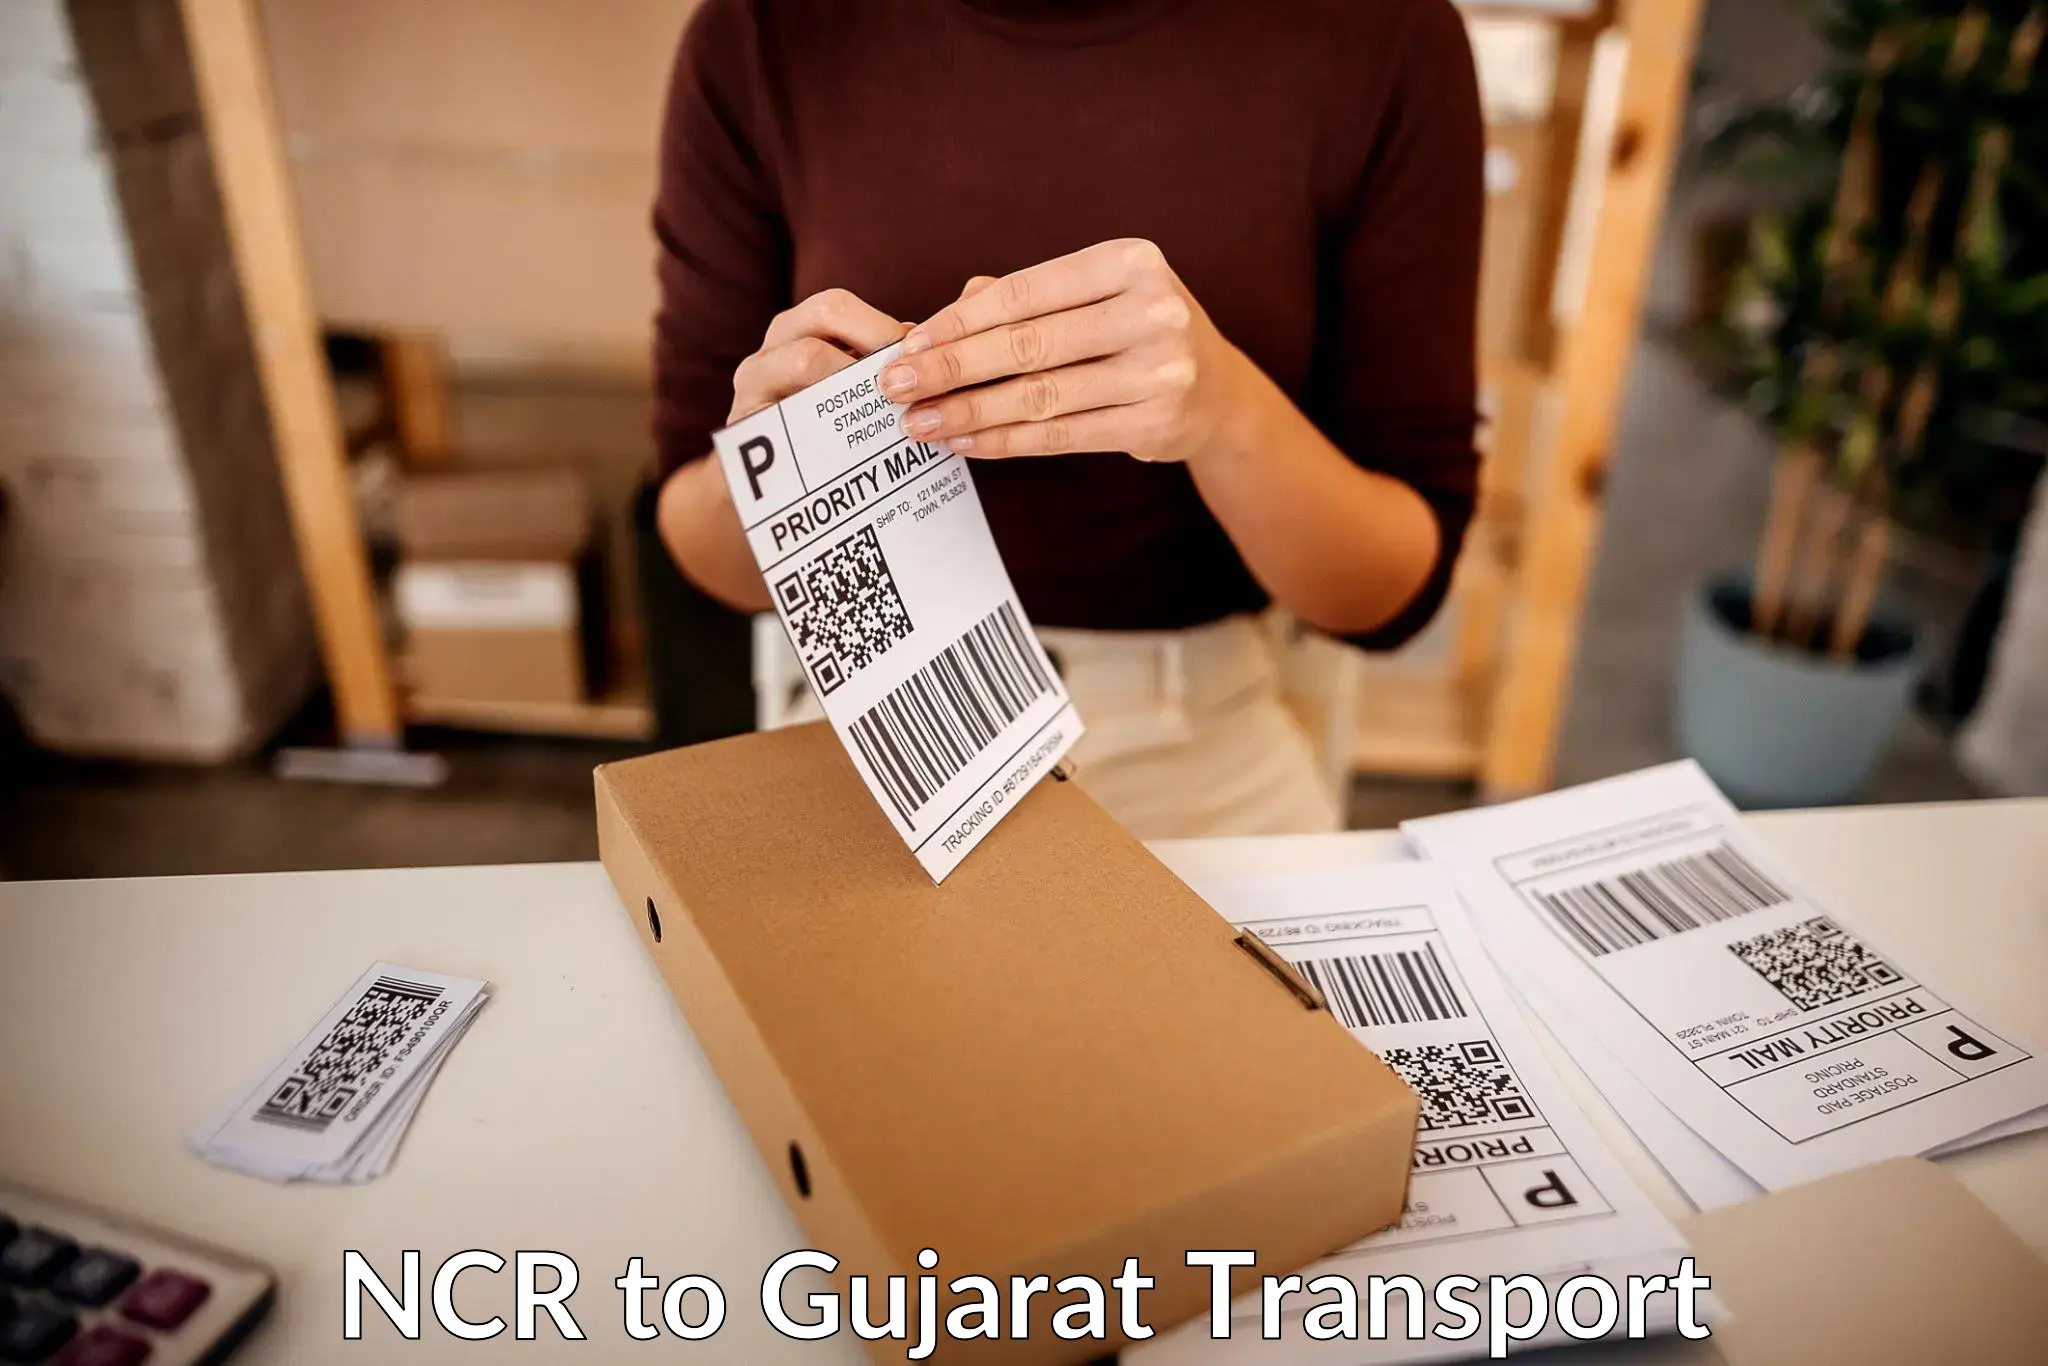 Furniture transport service NCR to Surat